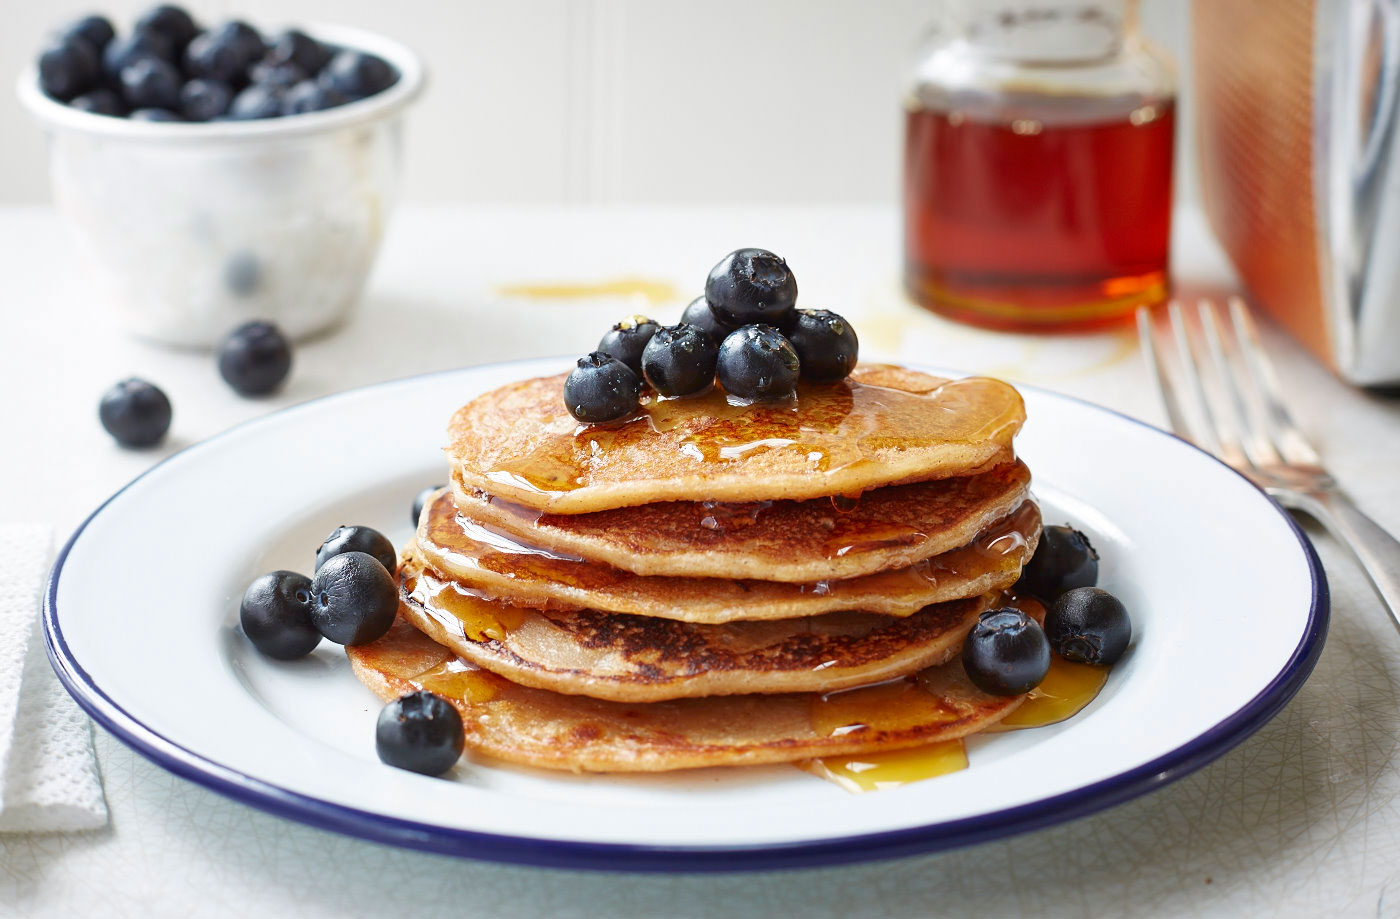 Pancakes για πρωινό: Η νόστιμη αμερικανιά!